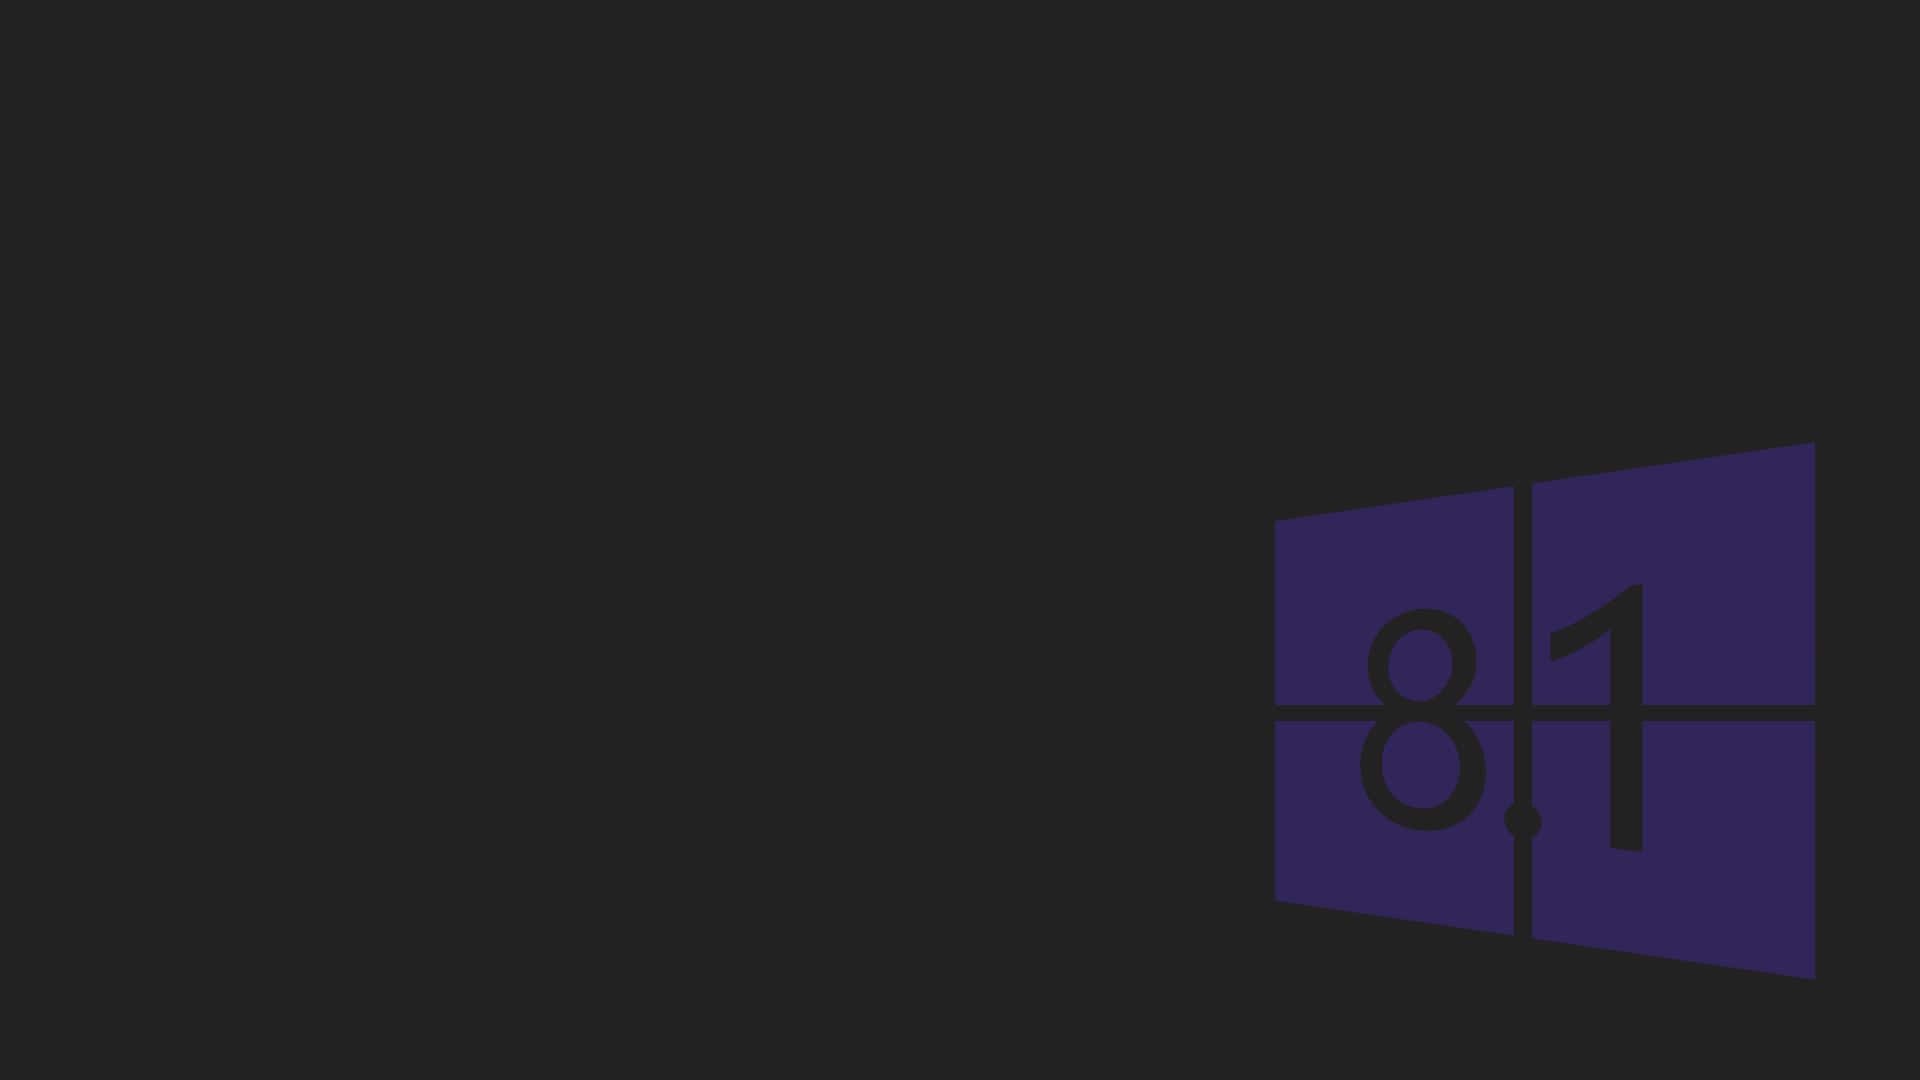 Windows 10 Logo On A Black Background Background